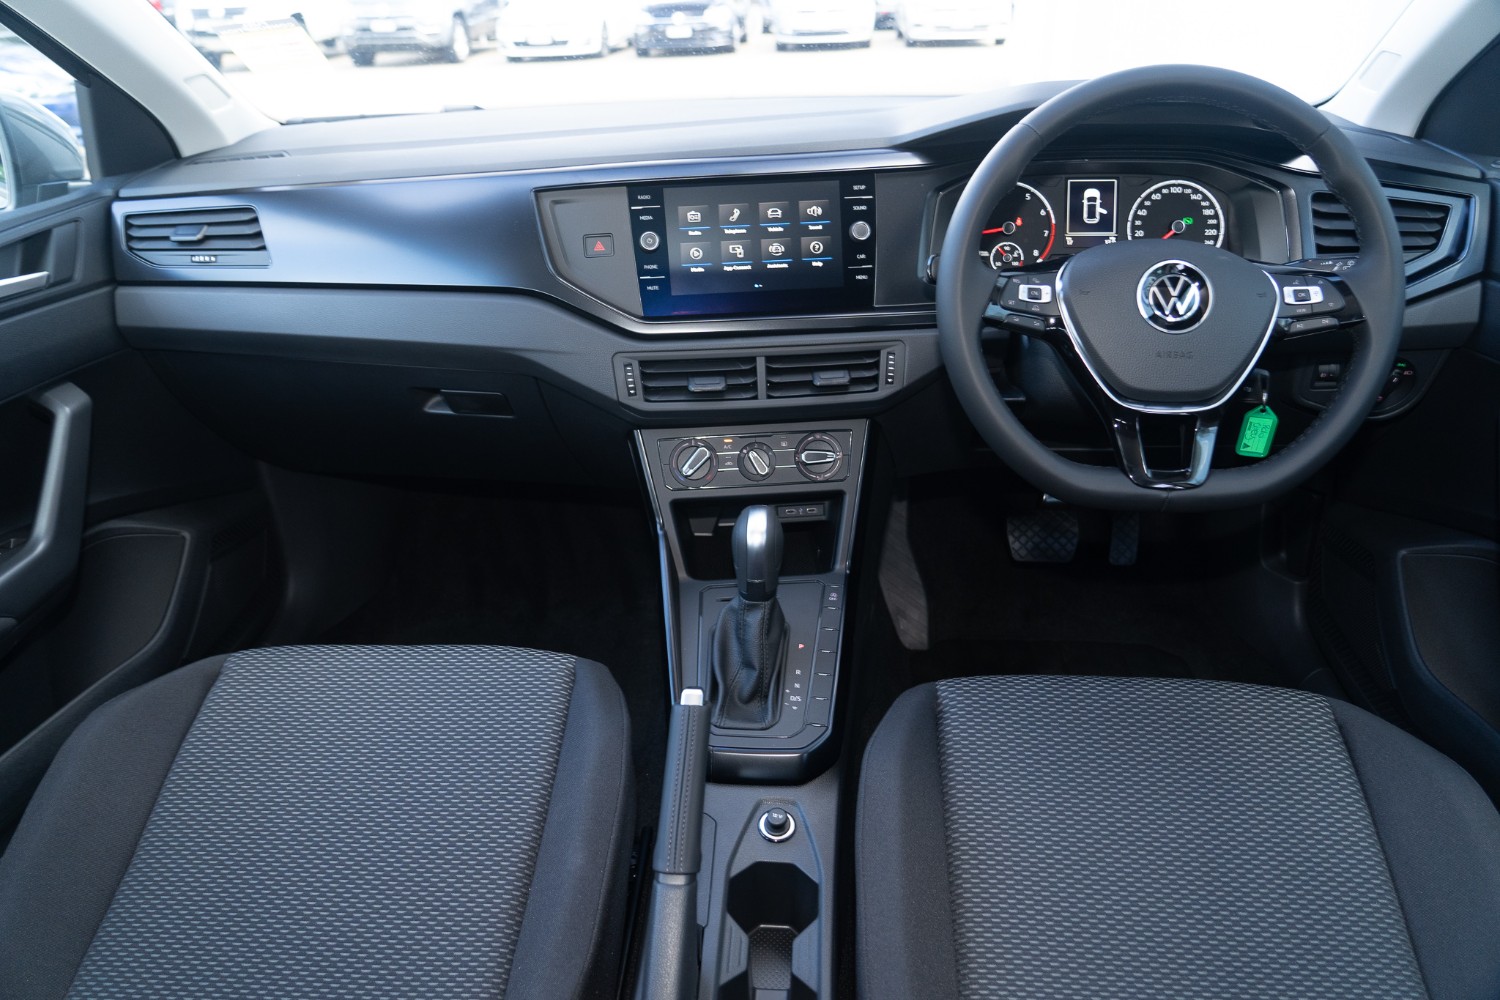 2021 Volkswagen Polo AW Trendline Hatchback Image 7